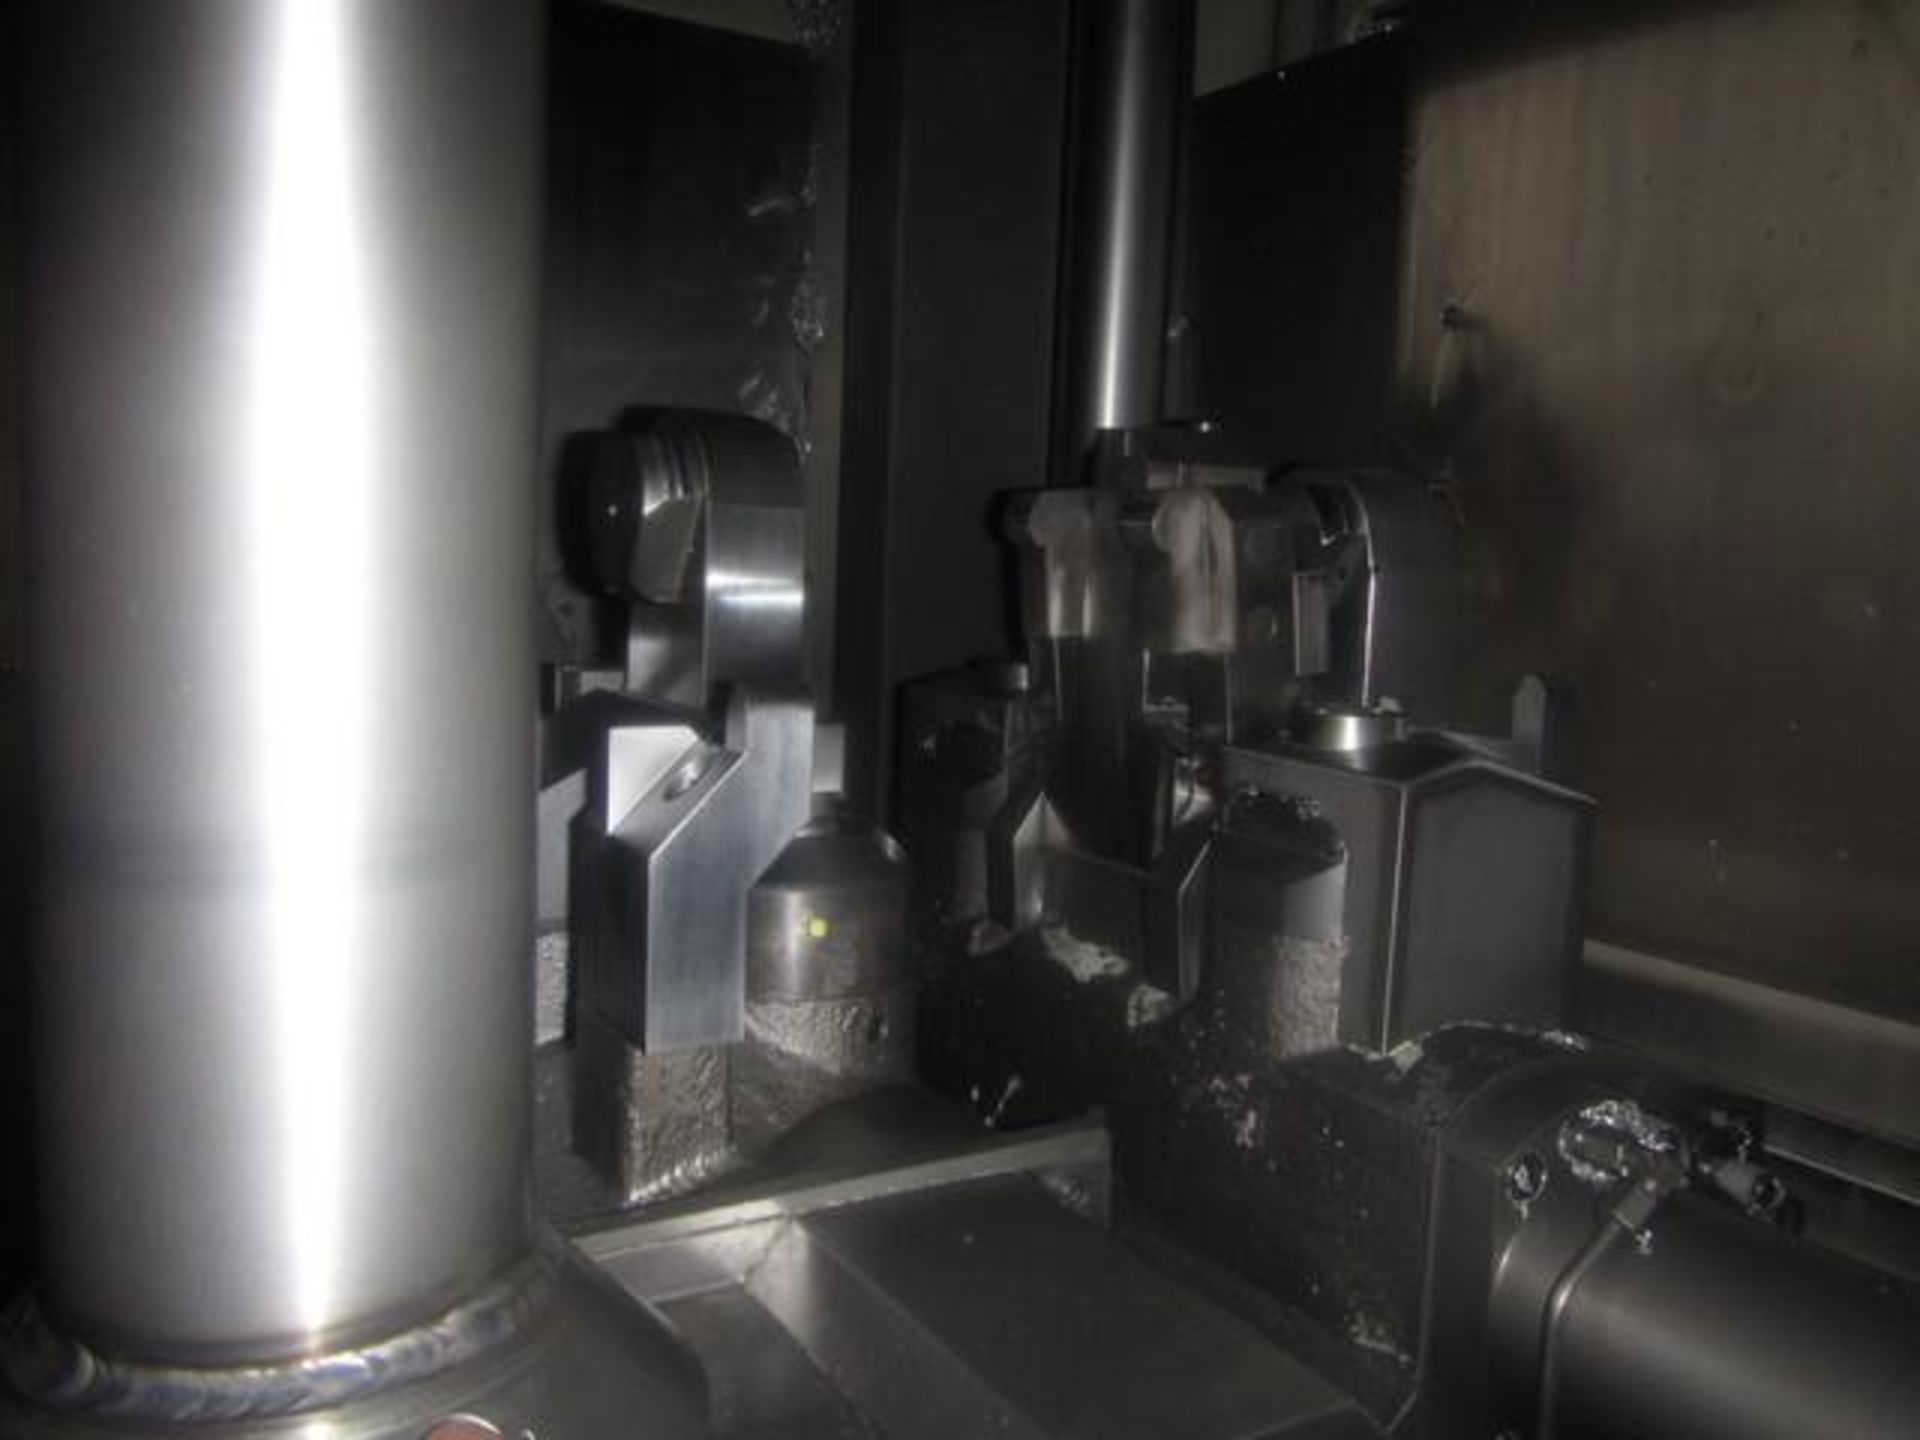 Horizontal CNC Machining Center - Image 10 of 19